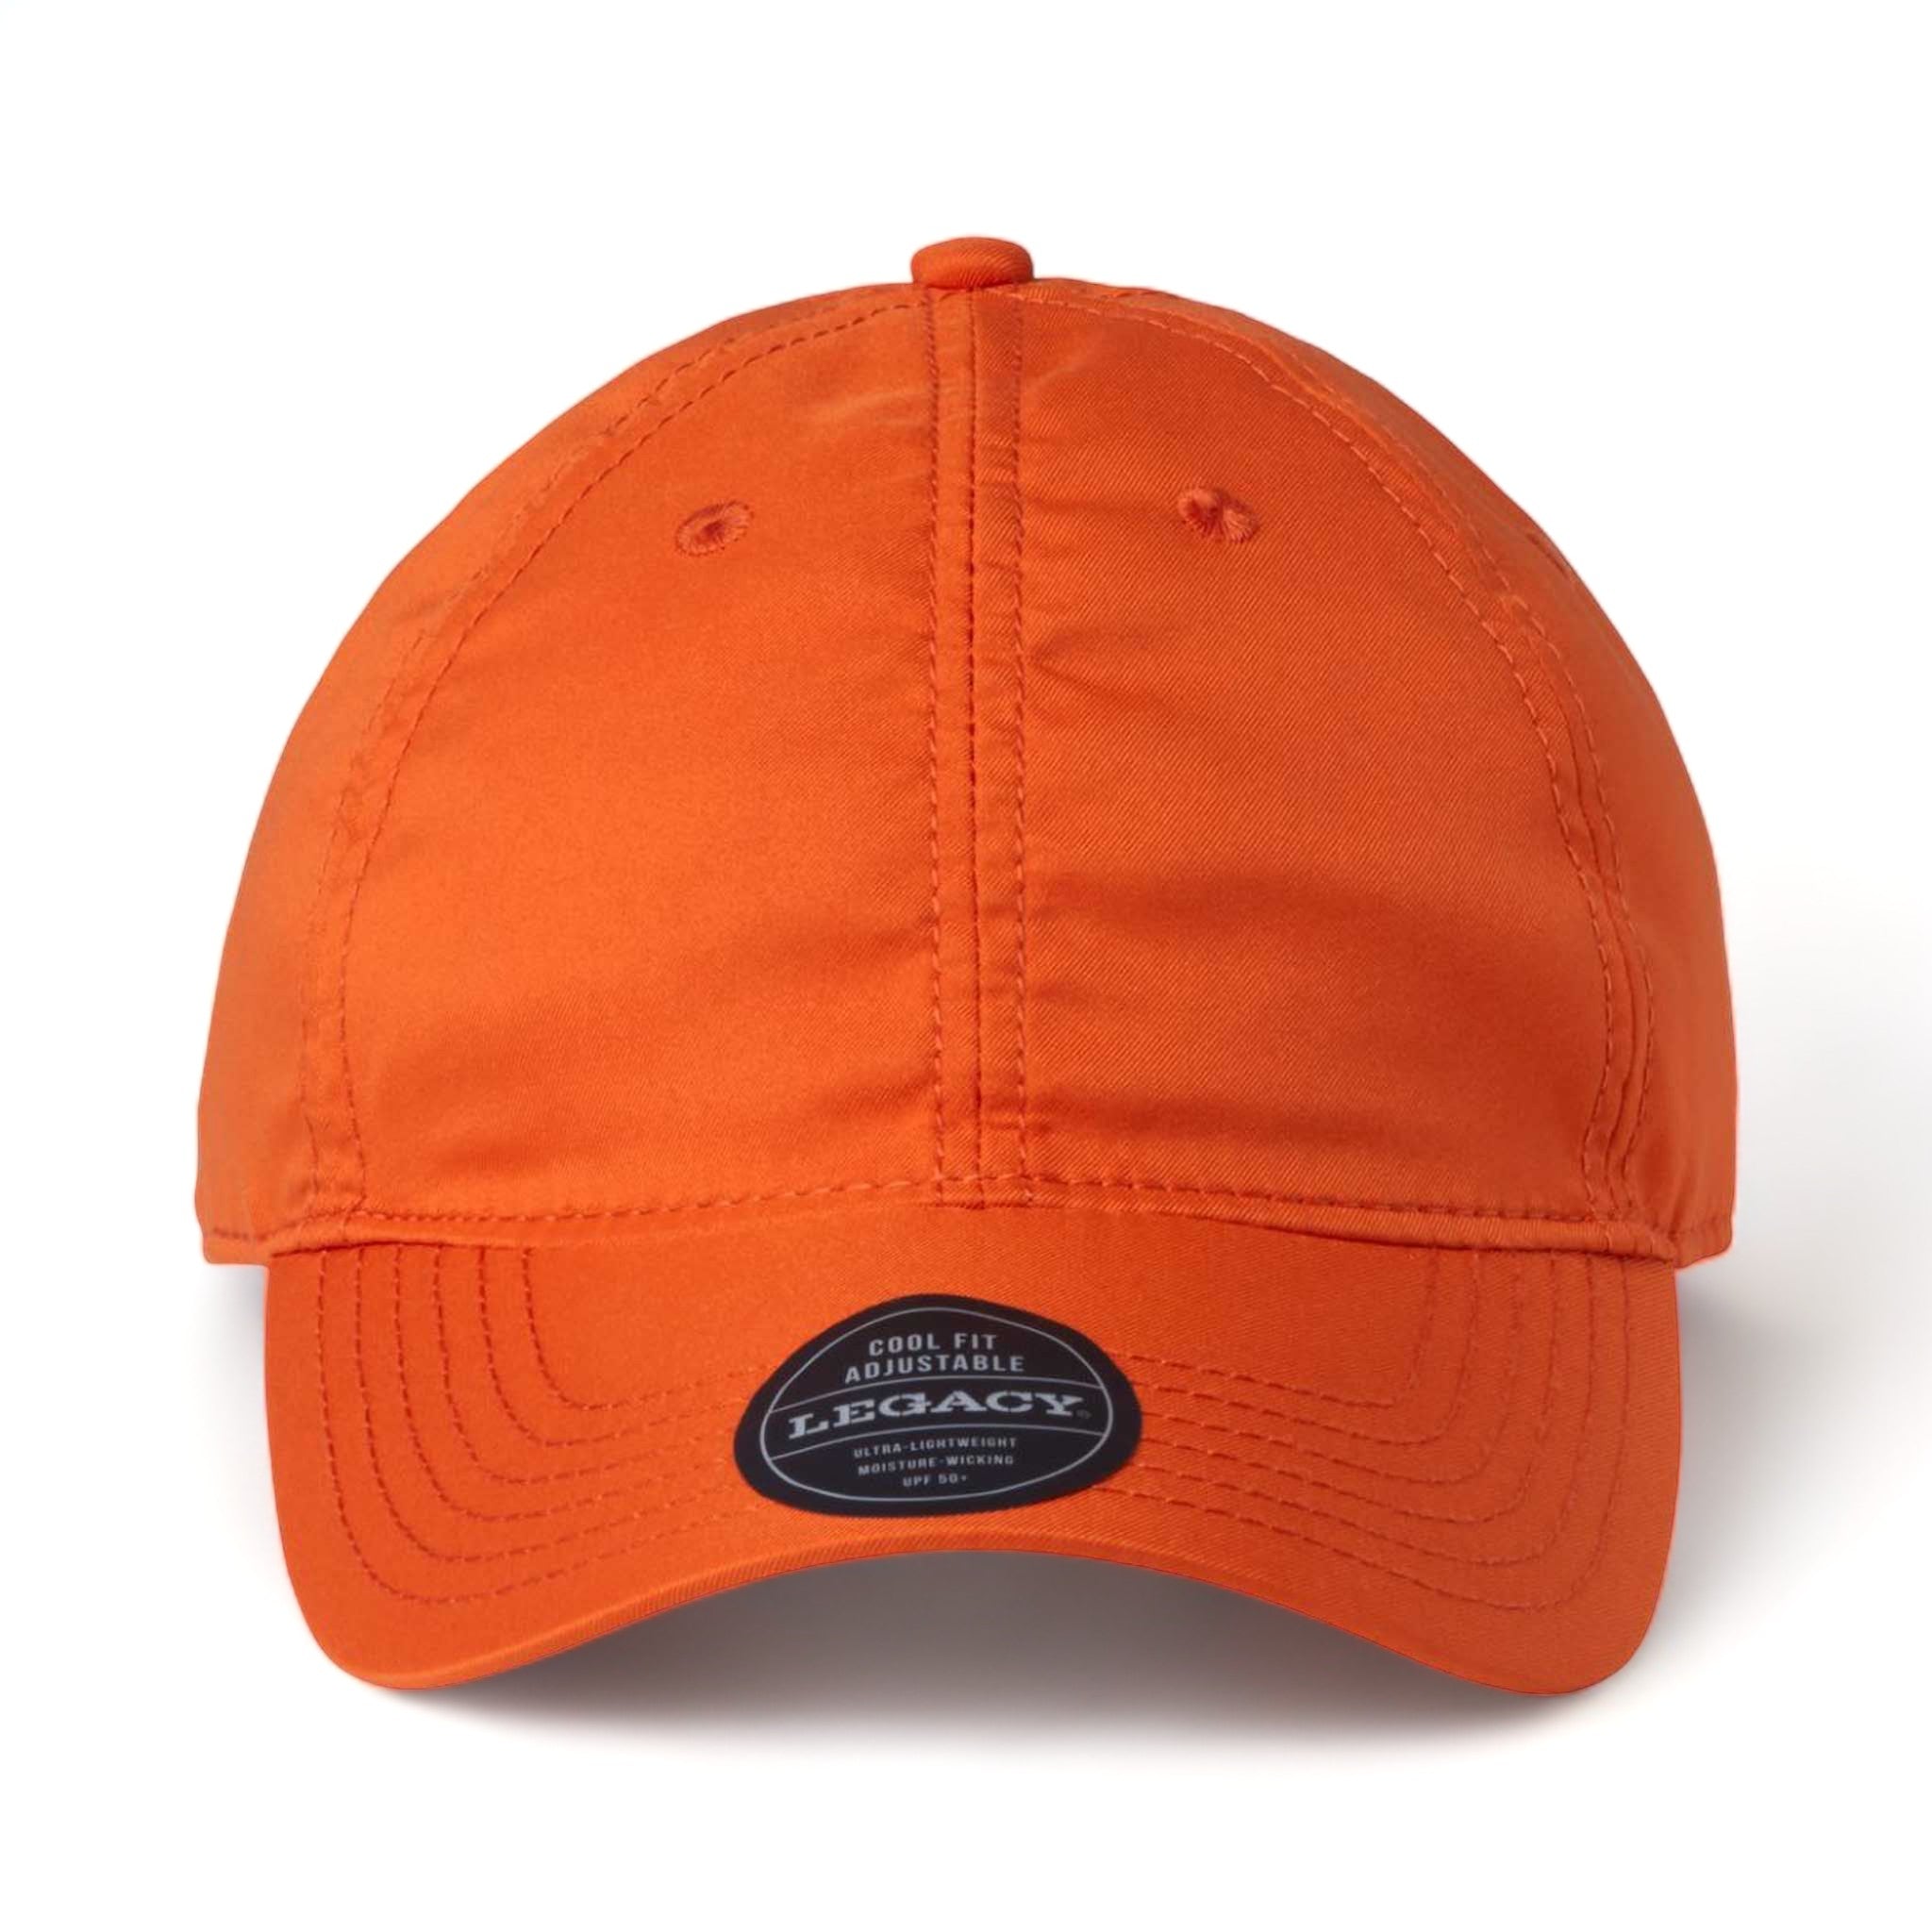 Front view of LEGACY CFA custom hat in orange